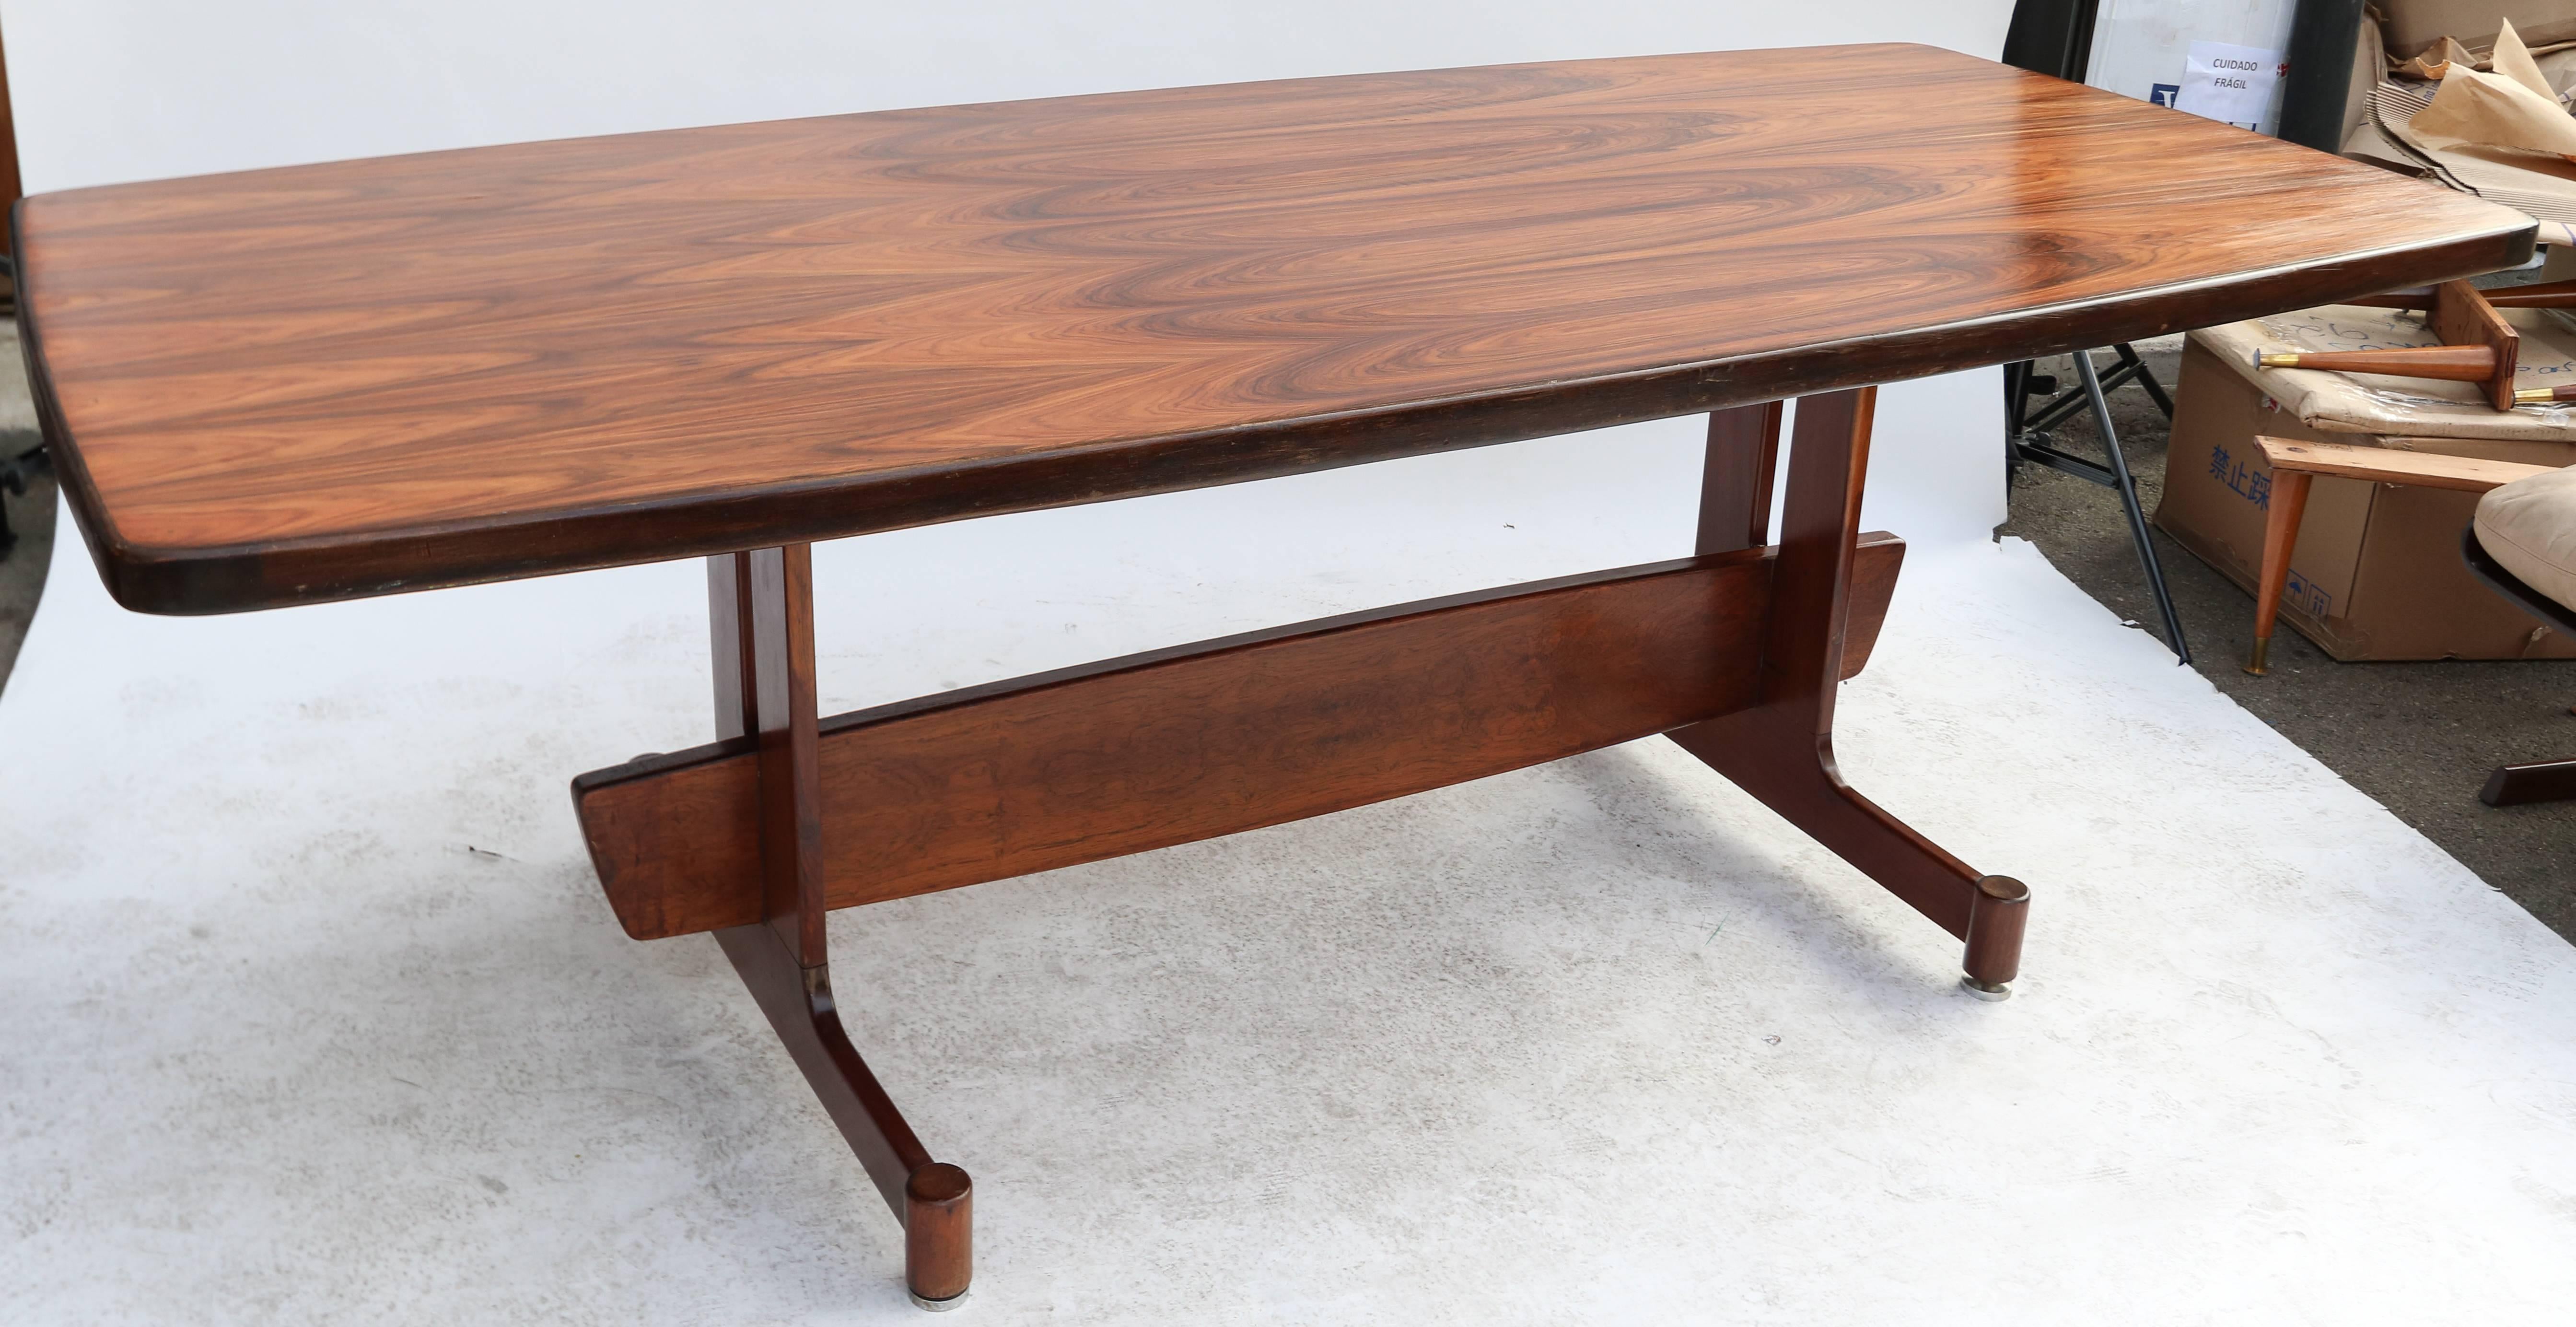 1960s, Brazilian Jacaranda wood rectangular dining table for eight.